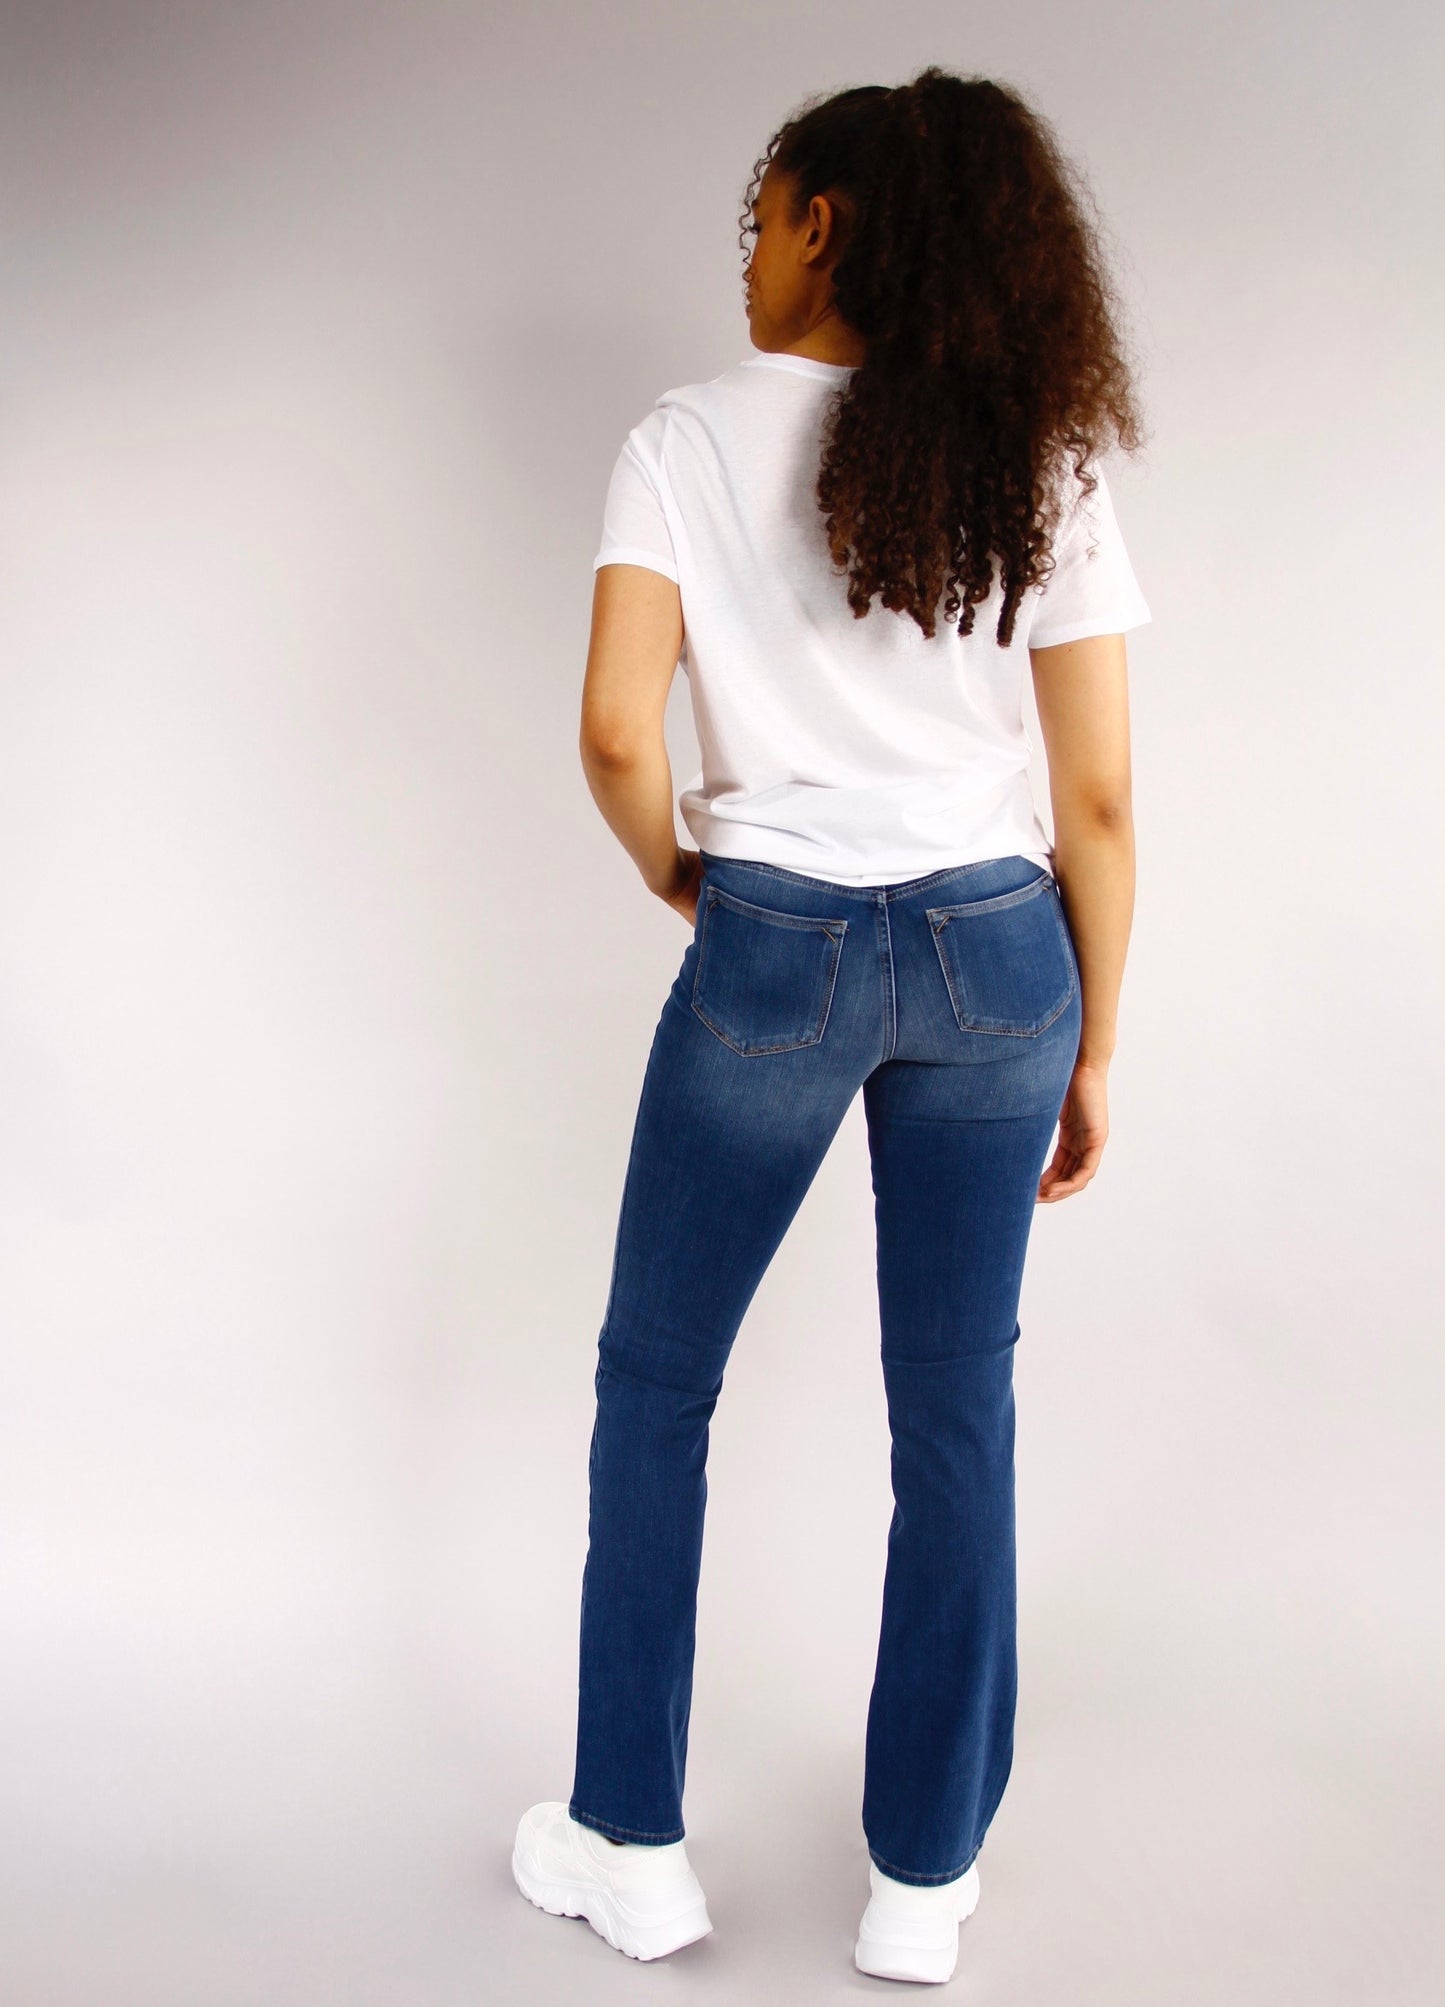 Viola Ocean blue Jeans - Dame - Straight leg - High waist - Stretchy